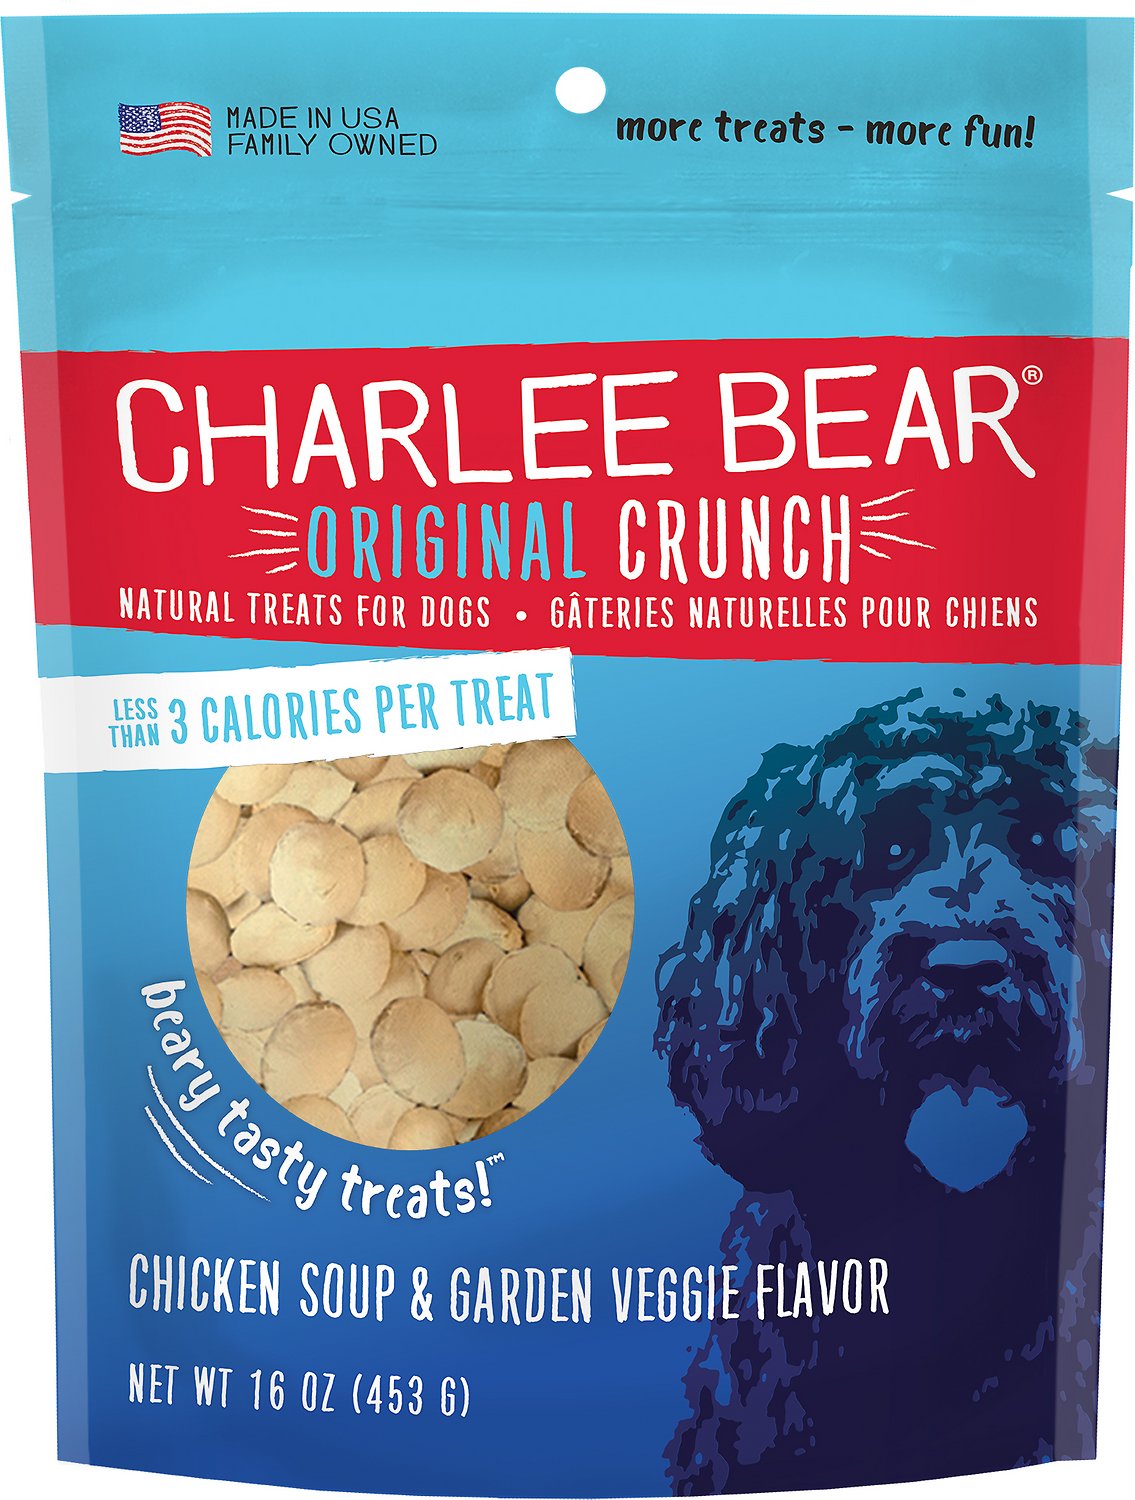 Charlee Bear Original Crunch Dog Treats - Chicken Soup & Garden Veggies 16 Oz